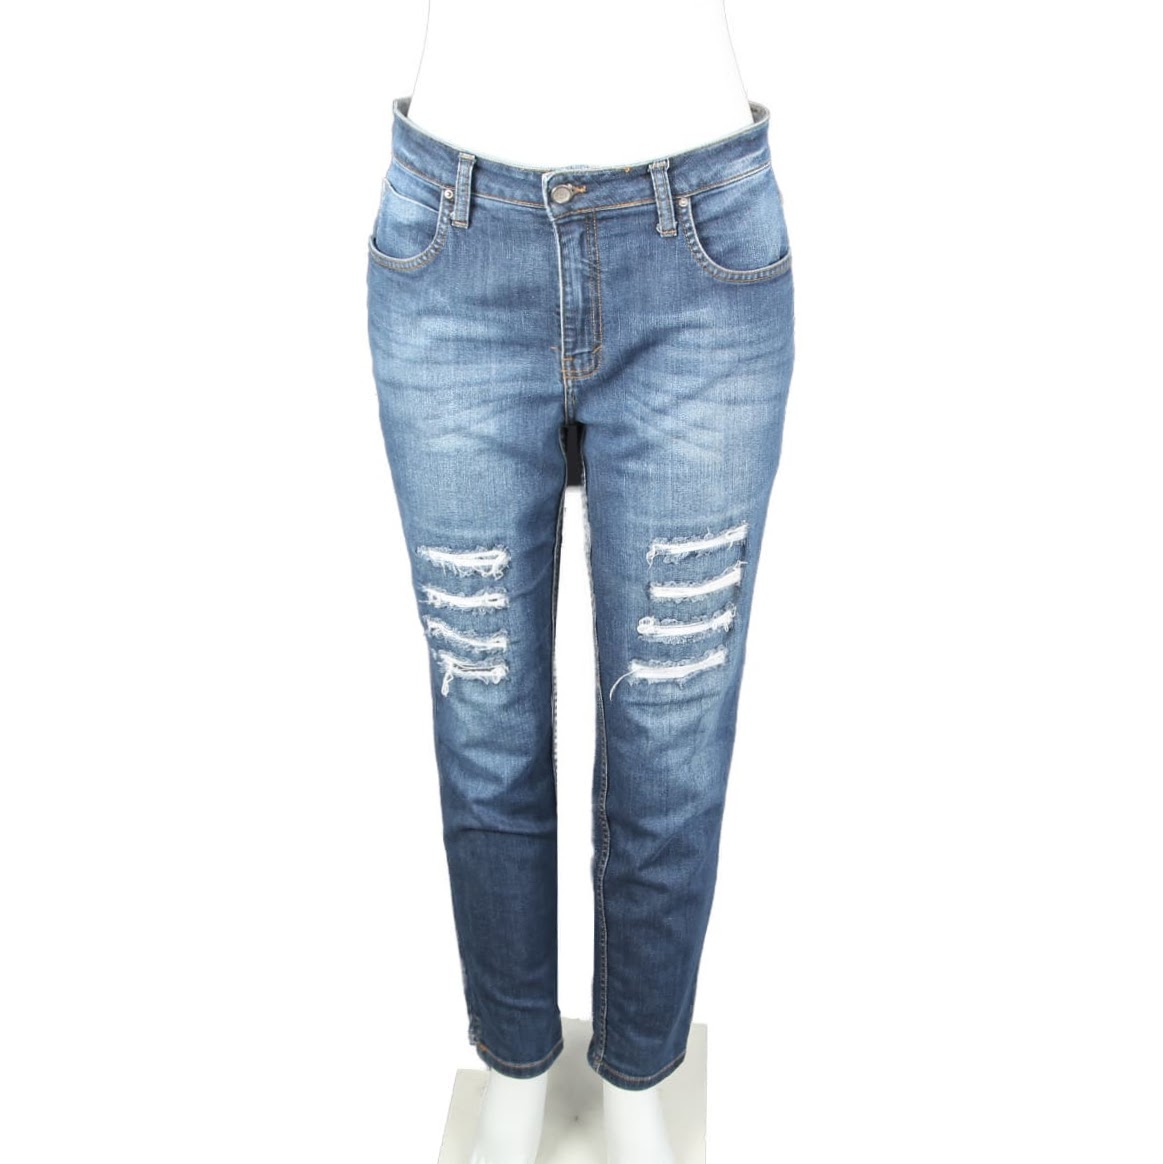 Calça Jeans - Nem - 46